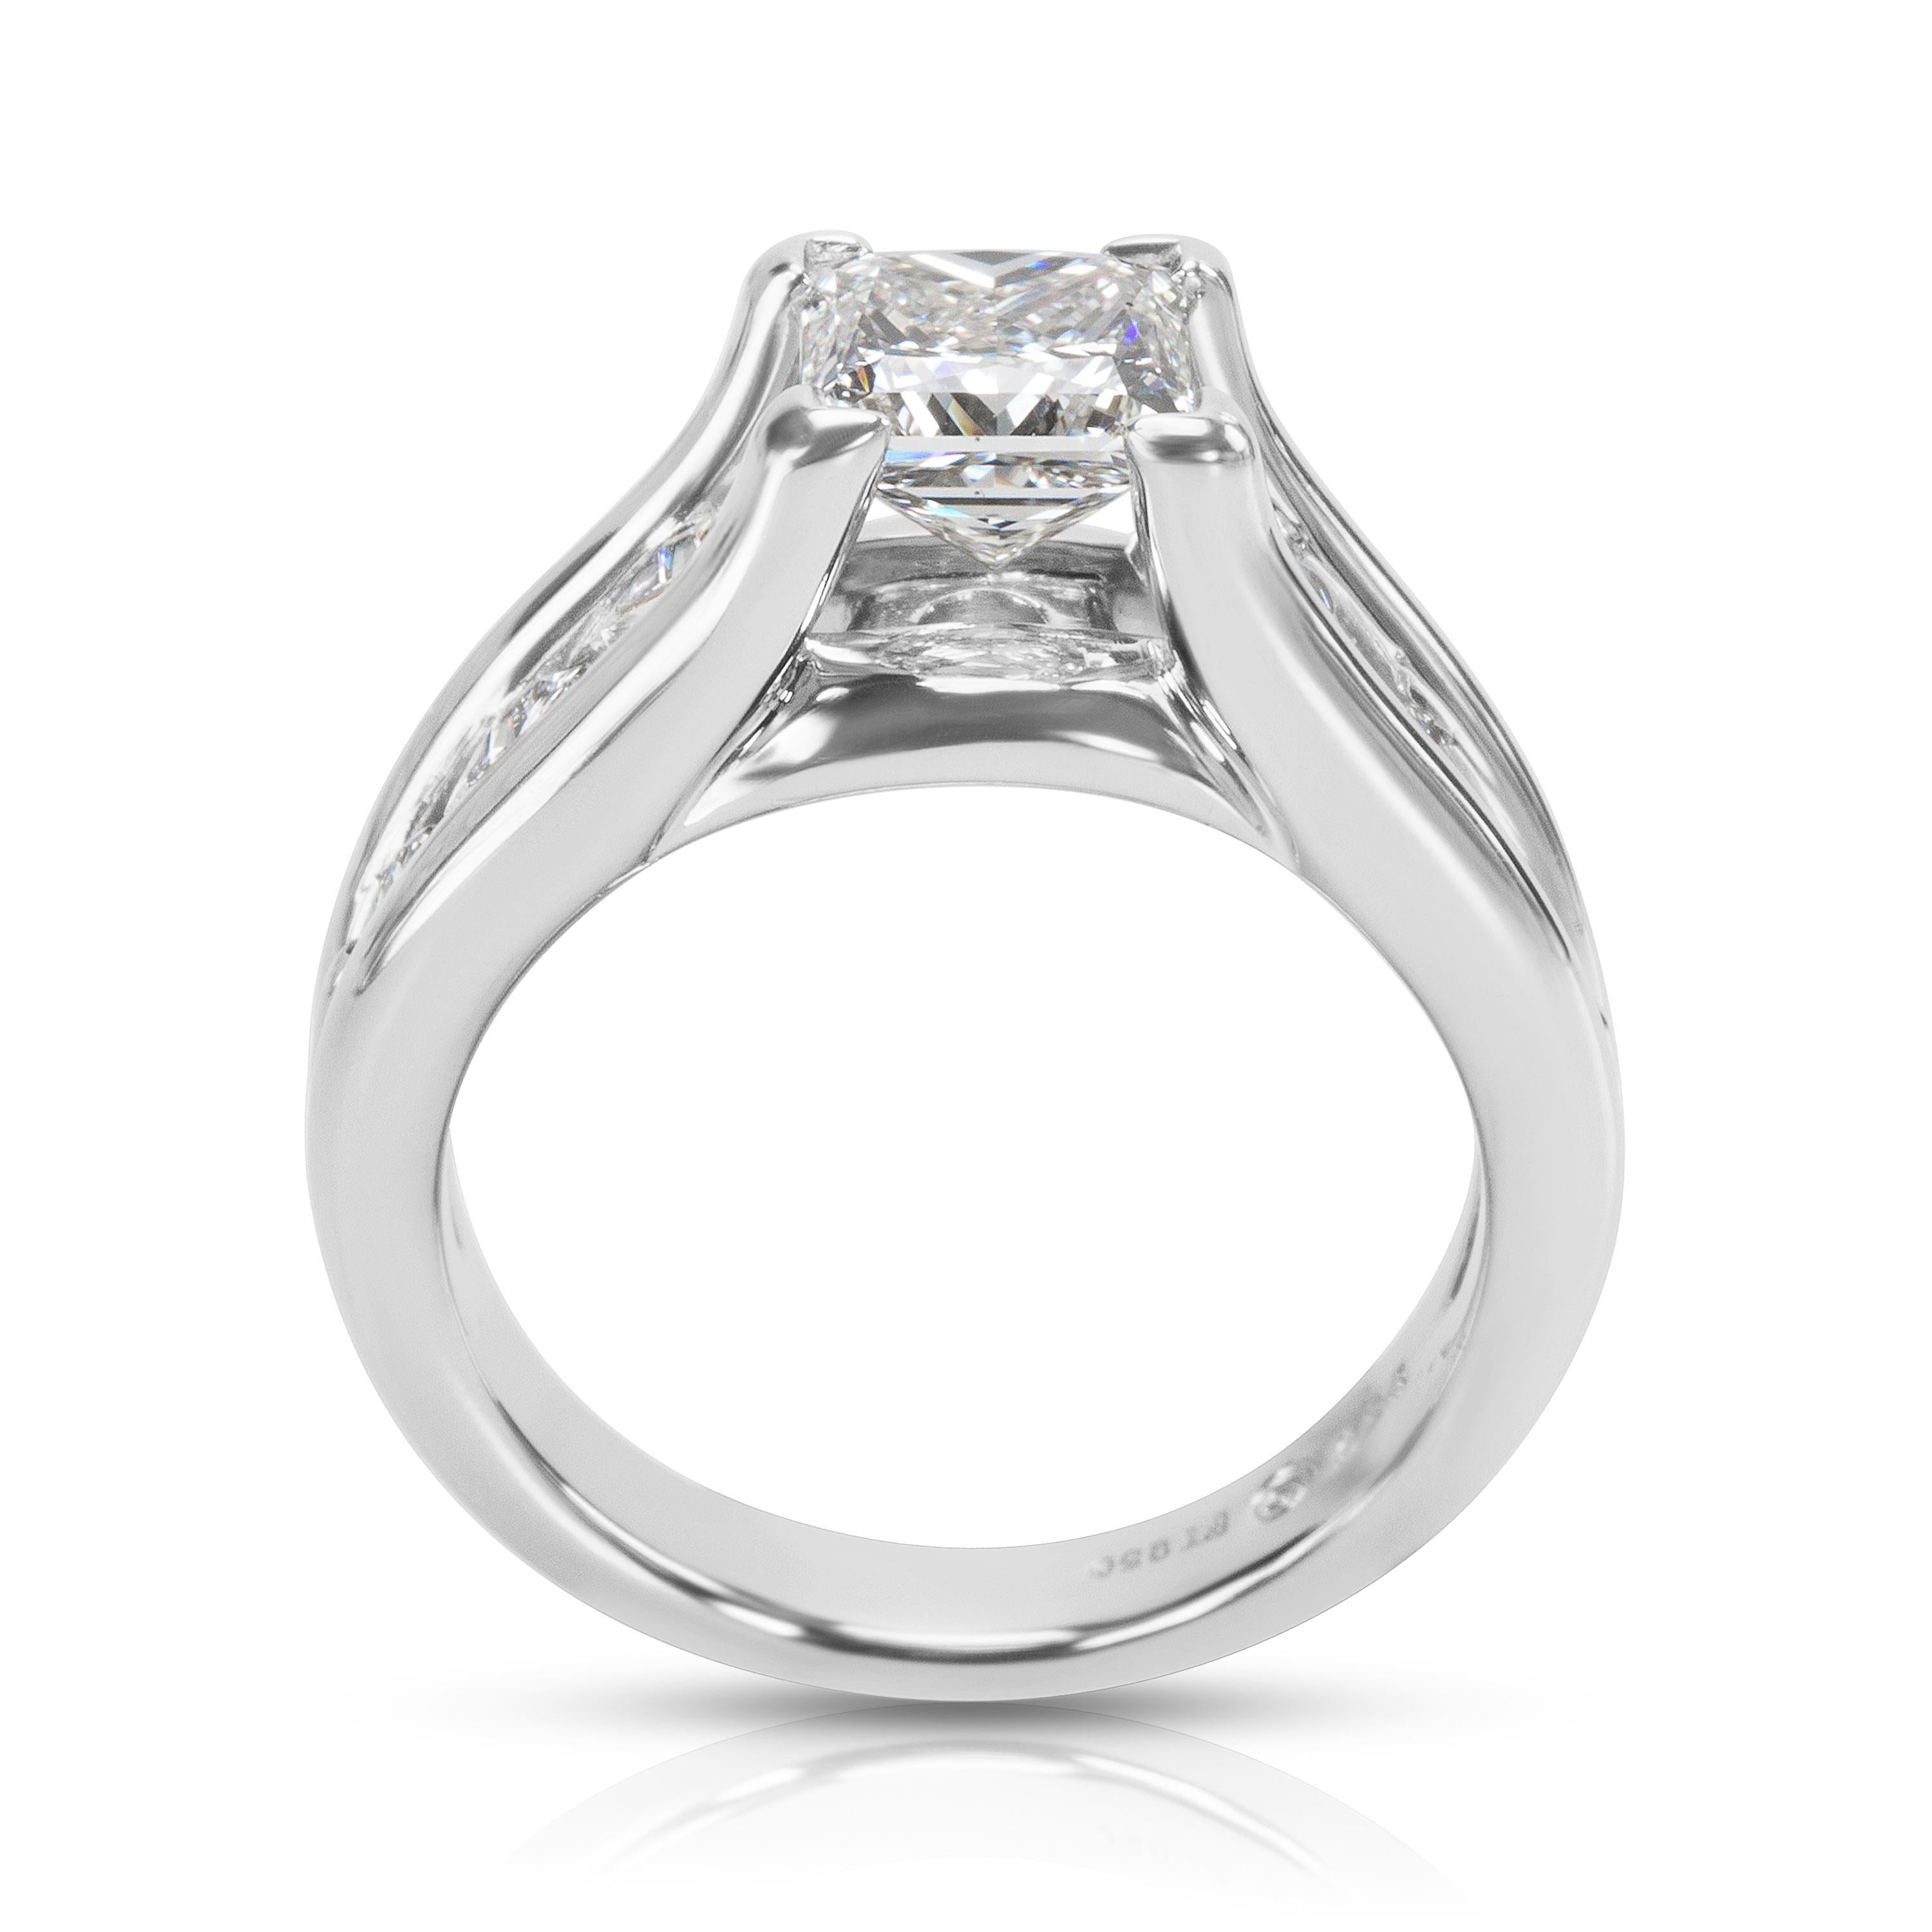 Princess Cut AGS Certified Princess Diamond Engagement Ring in Platinum G Vs2, 2.37 Carat